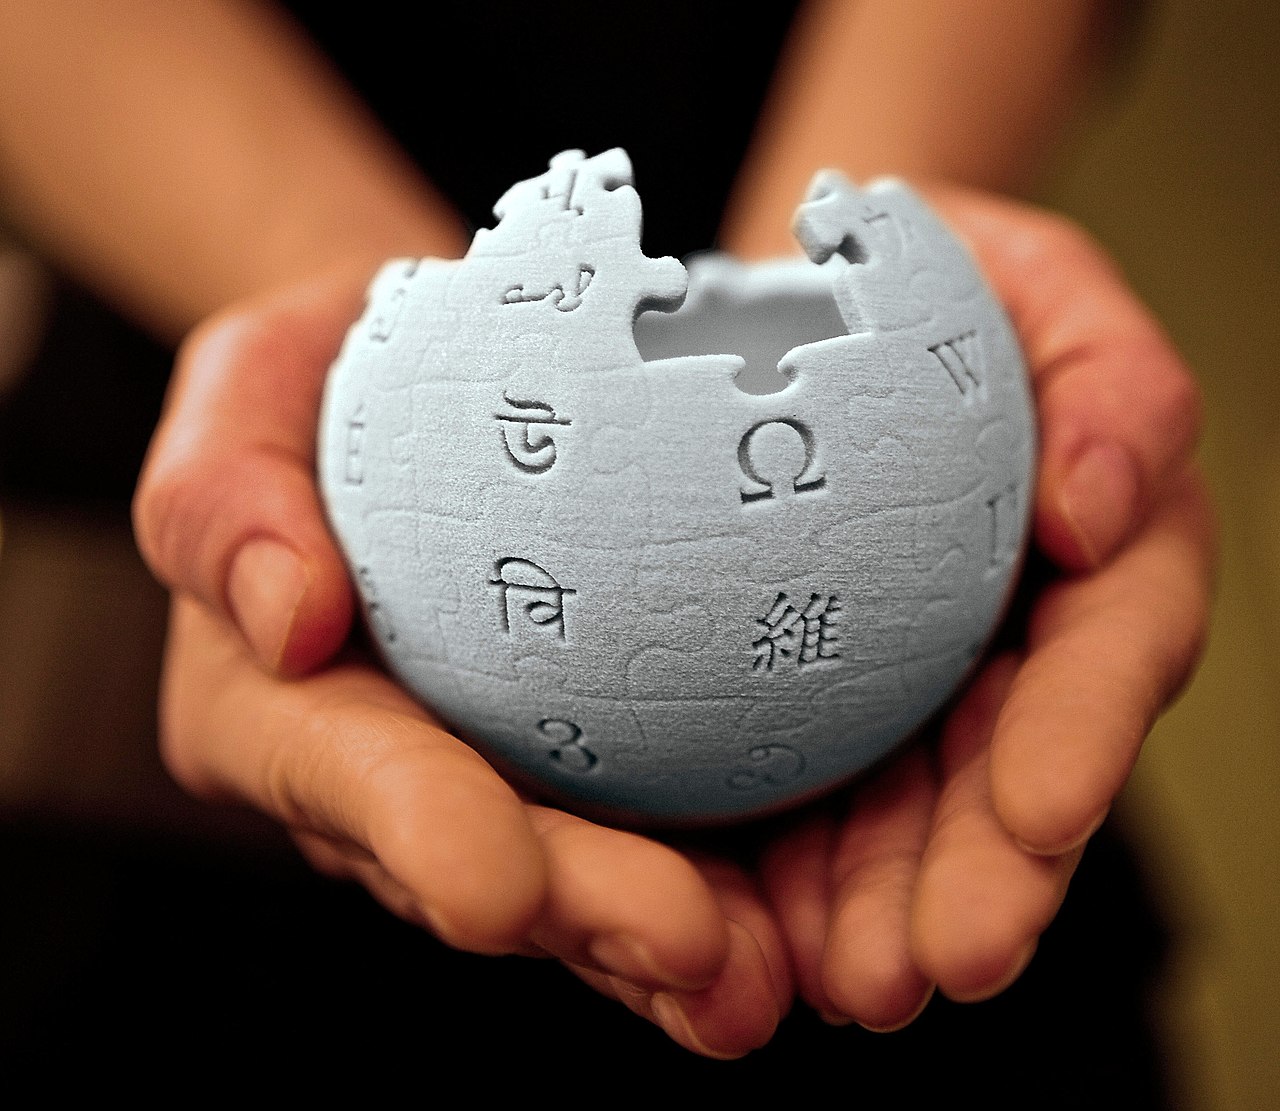 Википедия: Википедисты